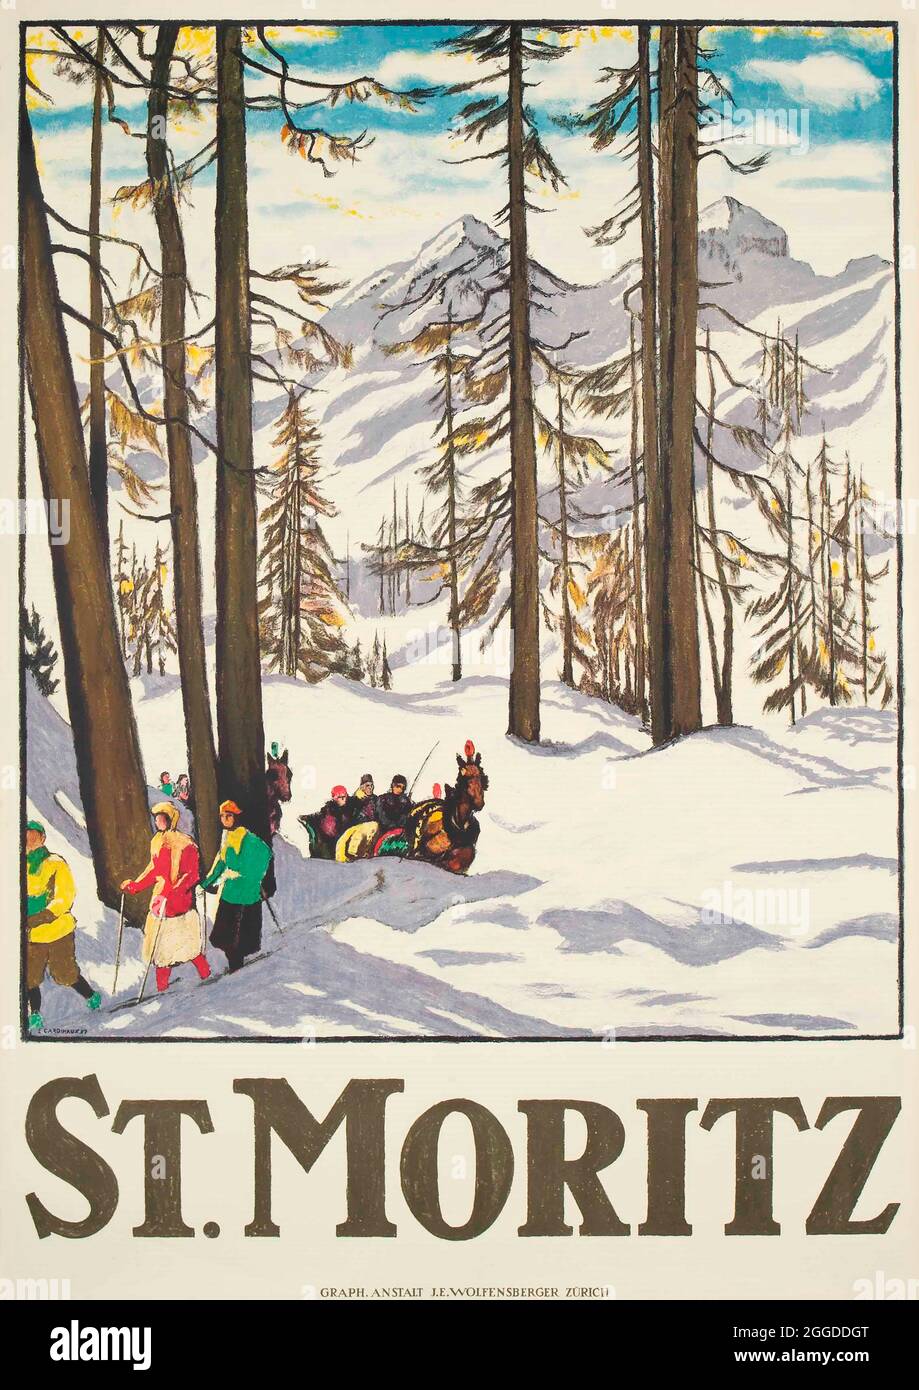 Details about   St Gotthard Switzerland 1935 Vintage Poster Print Travel Tourism Swiss Alps 